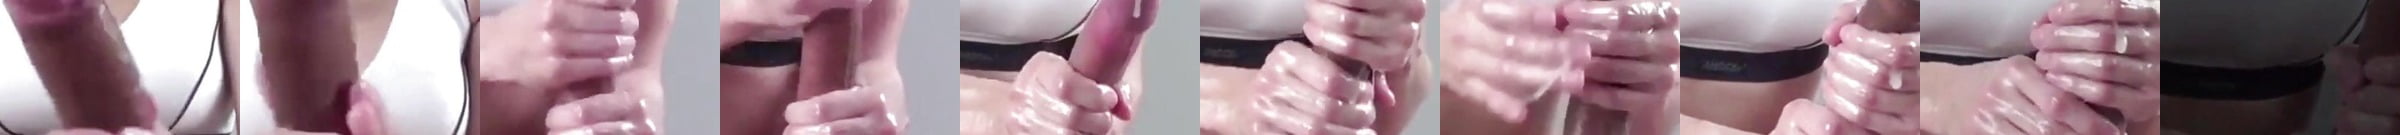 Featured Cock Massage Porn Videos 5 Xhamster